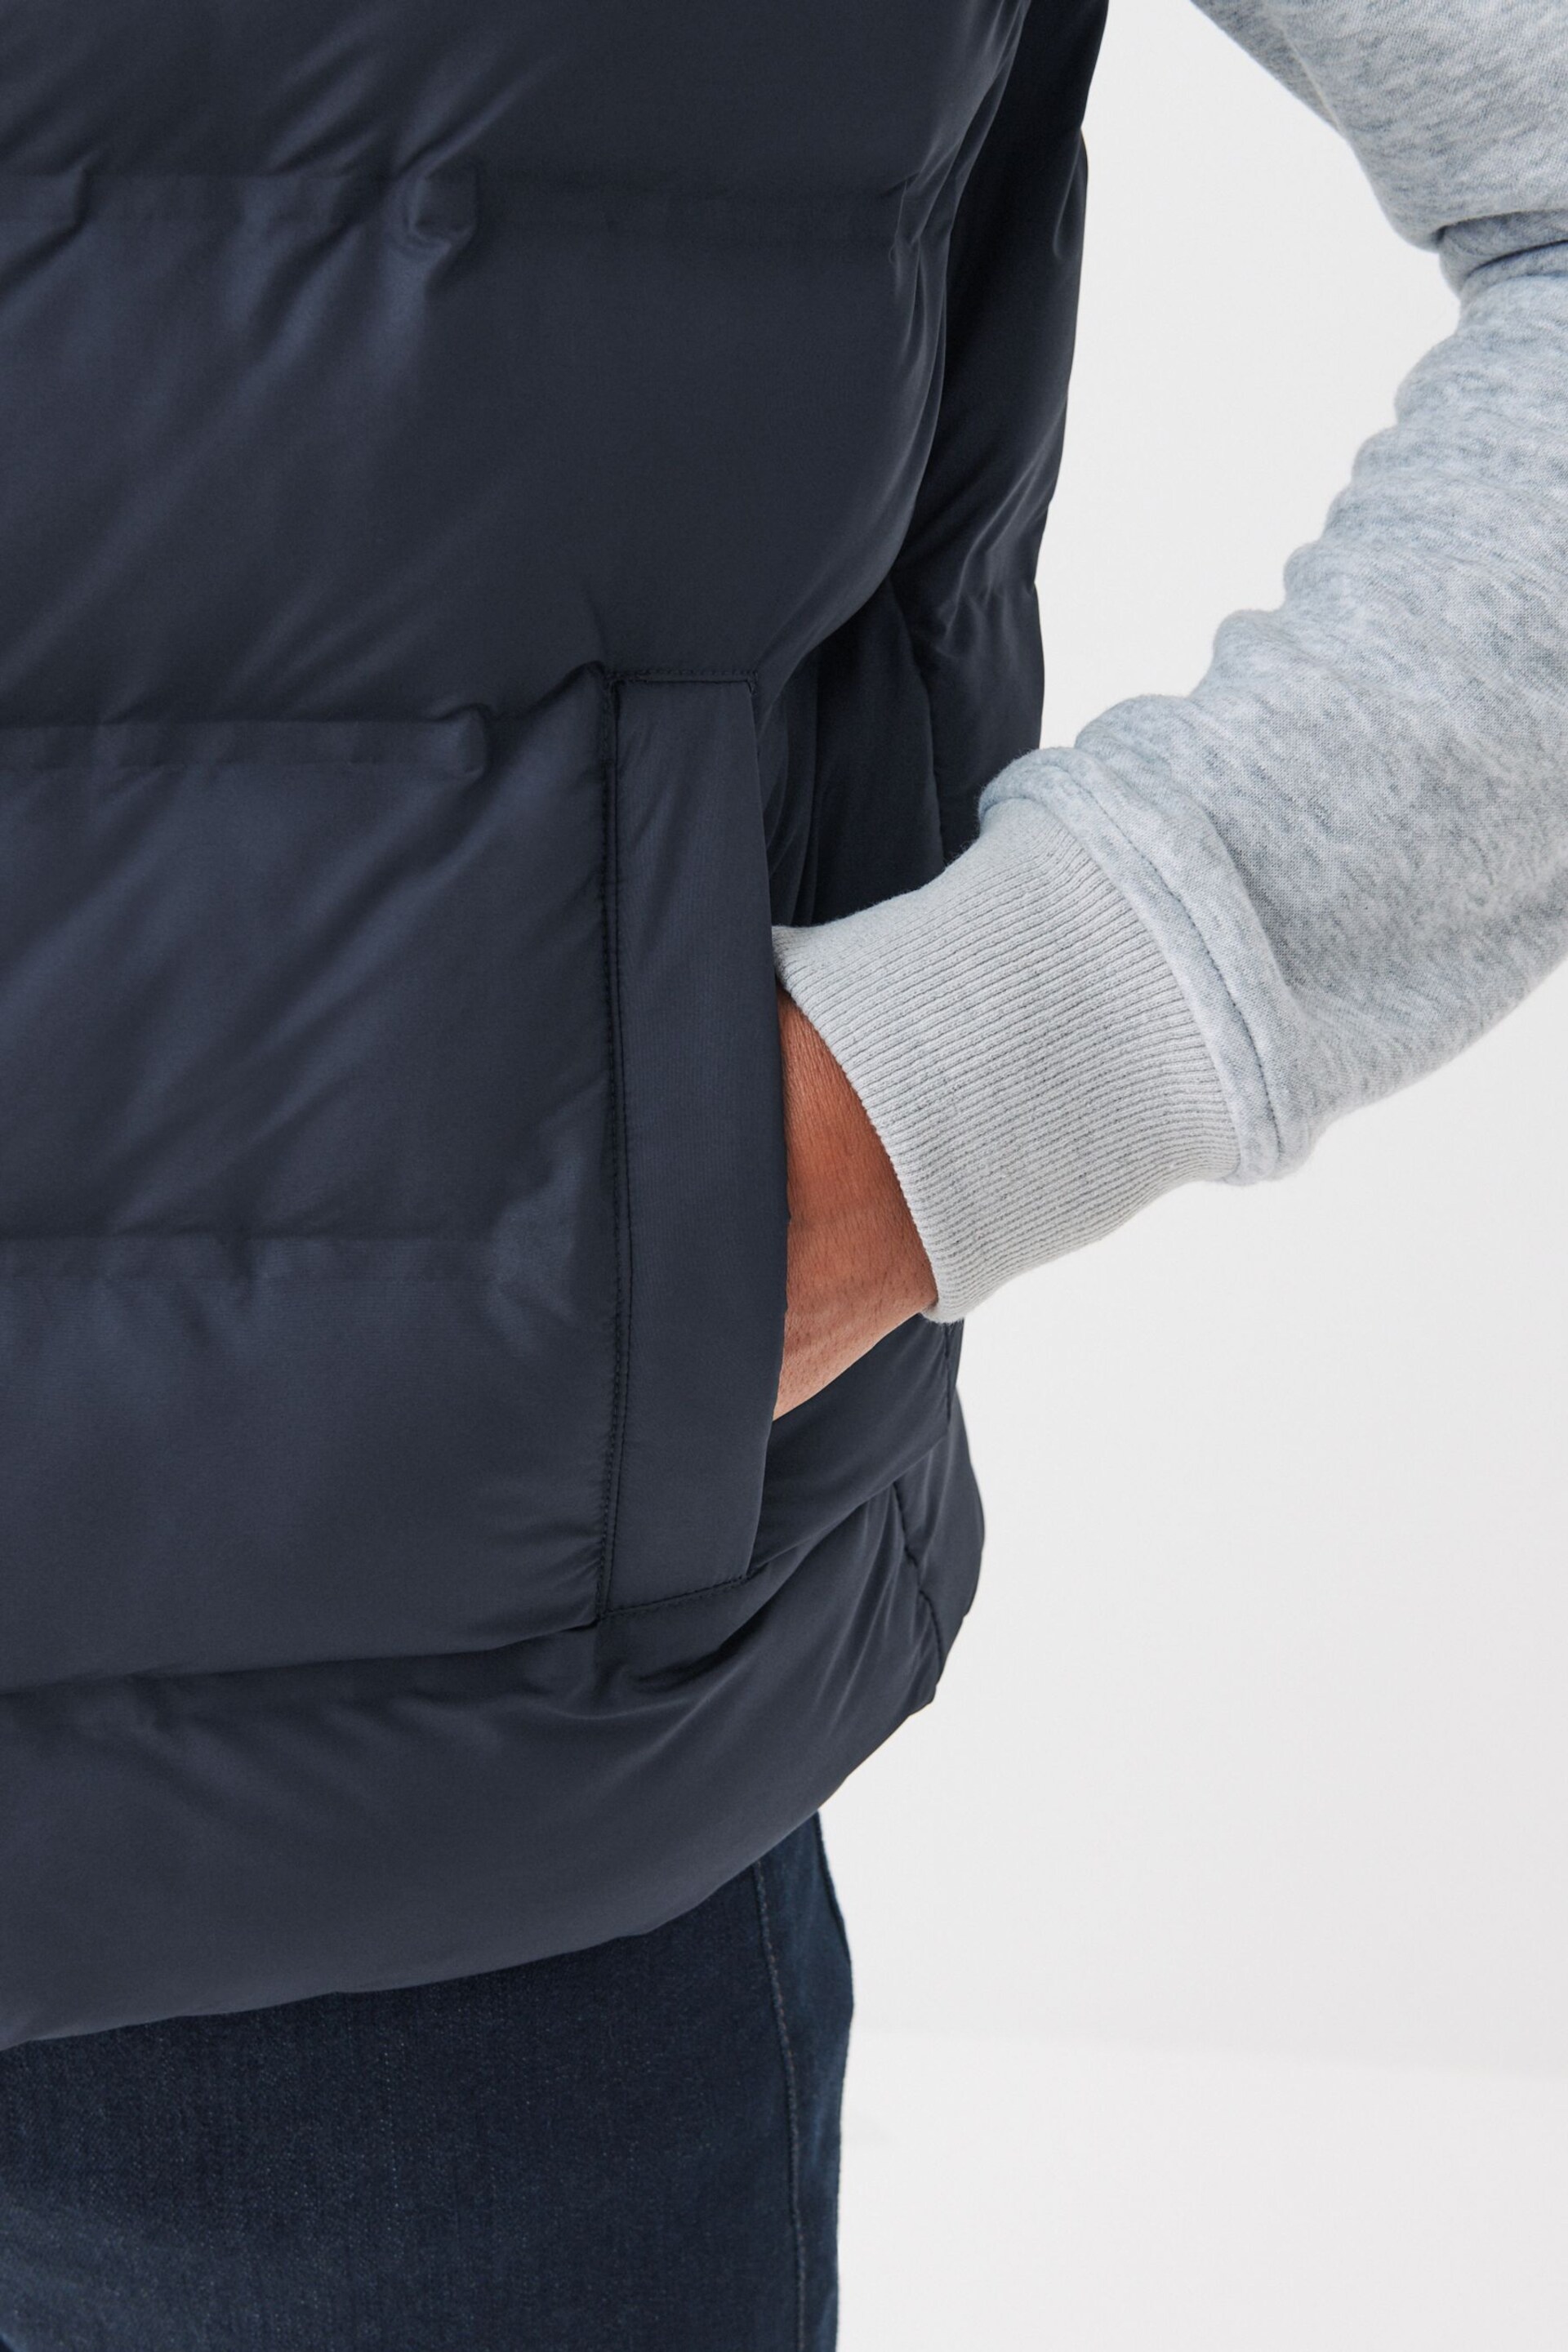 Navy Blue/Grey Jersey Sleeve Puffer Jacket - Image 6 of 12